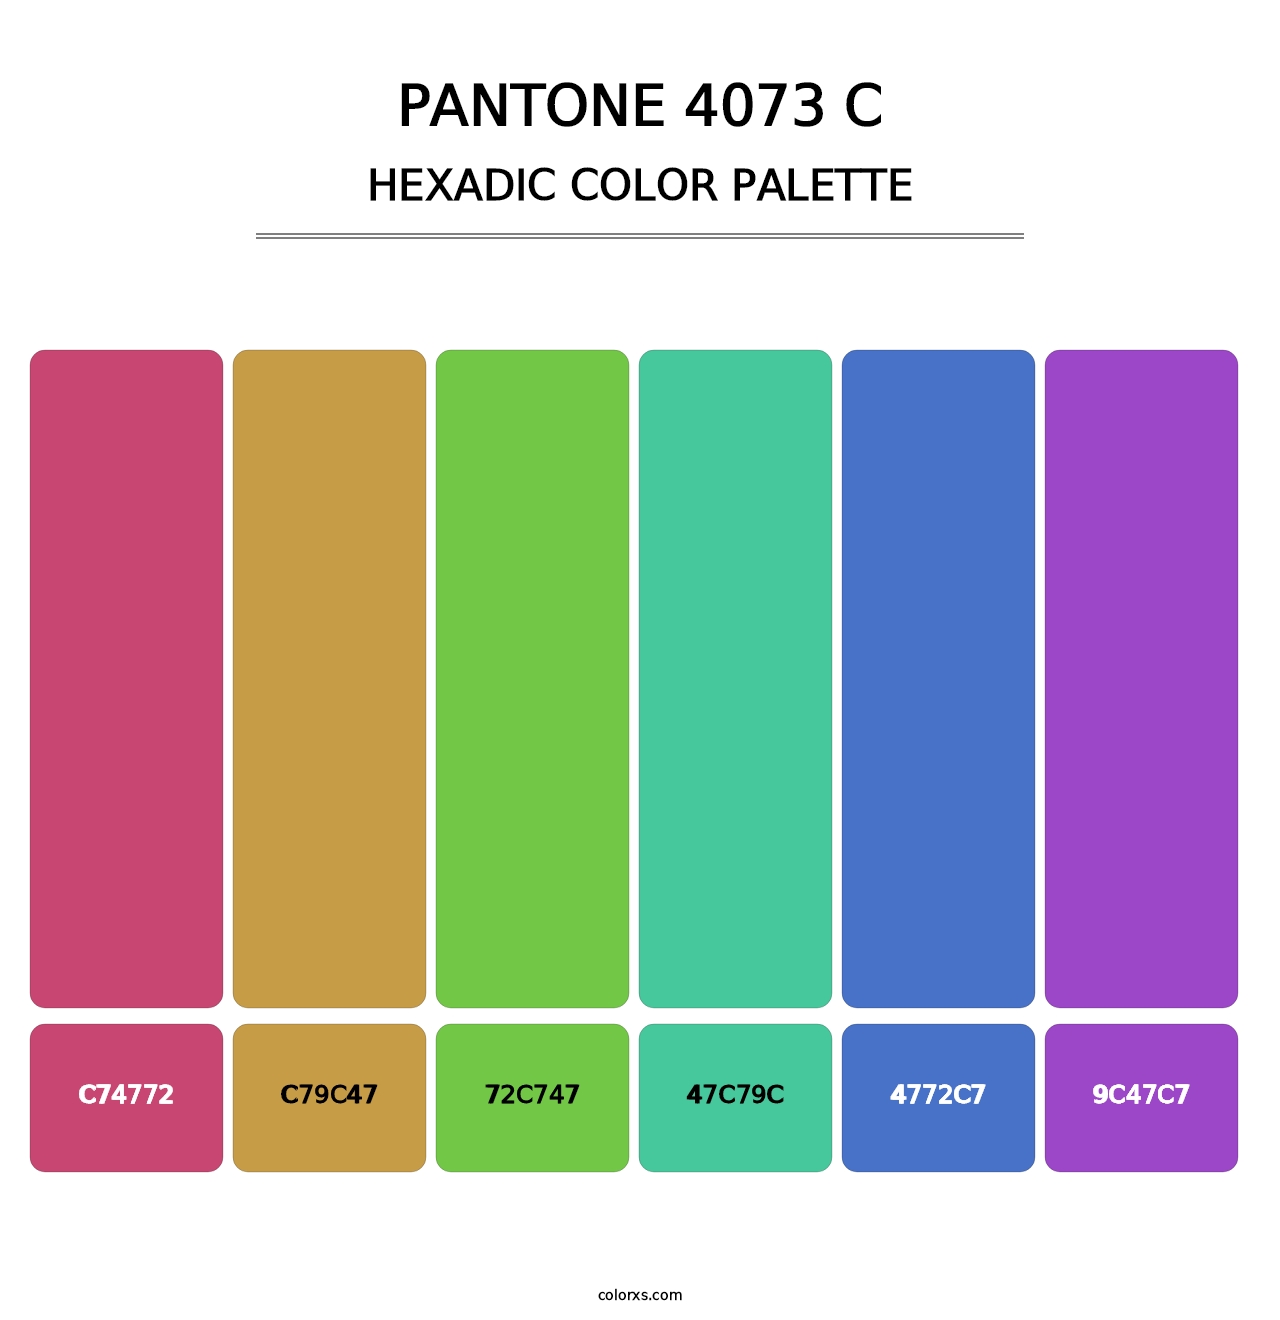 PANTONE 4073 C - Hexadic Color Palette